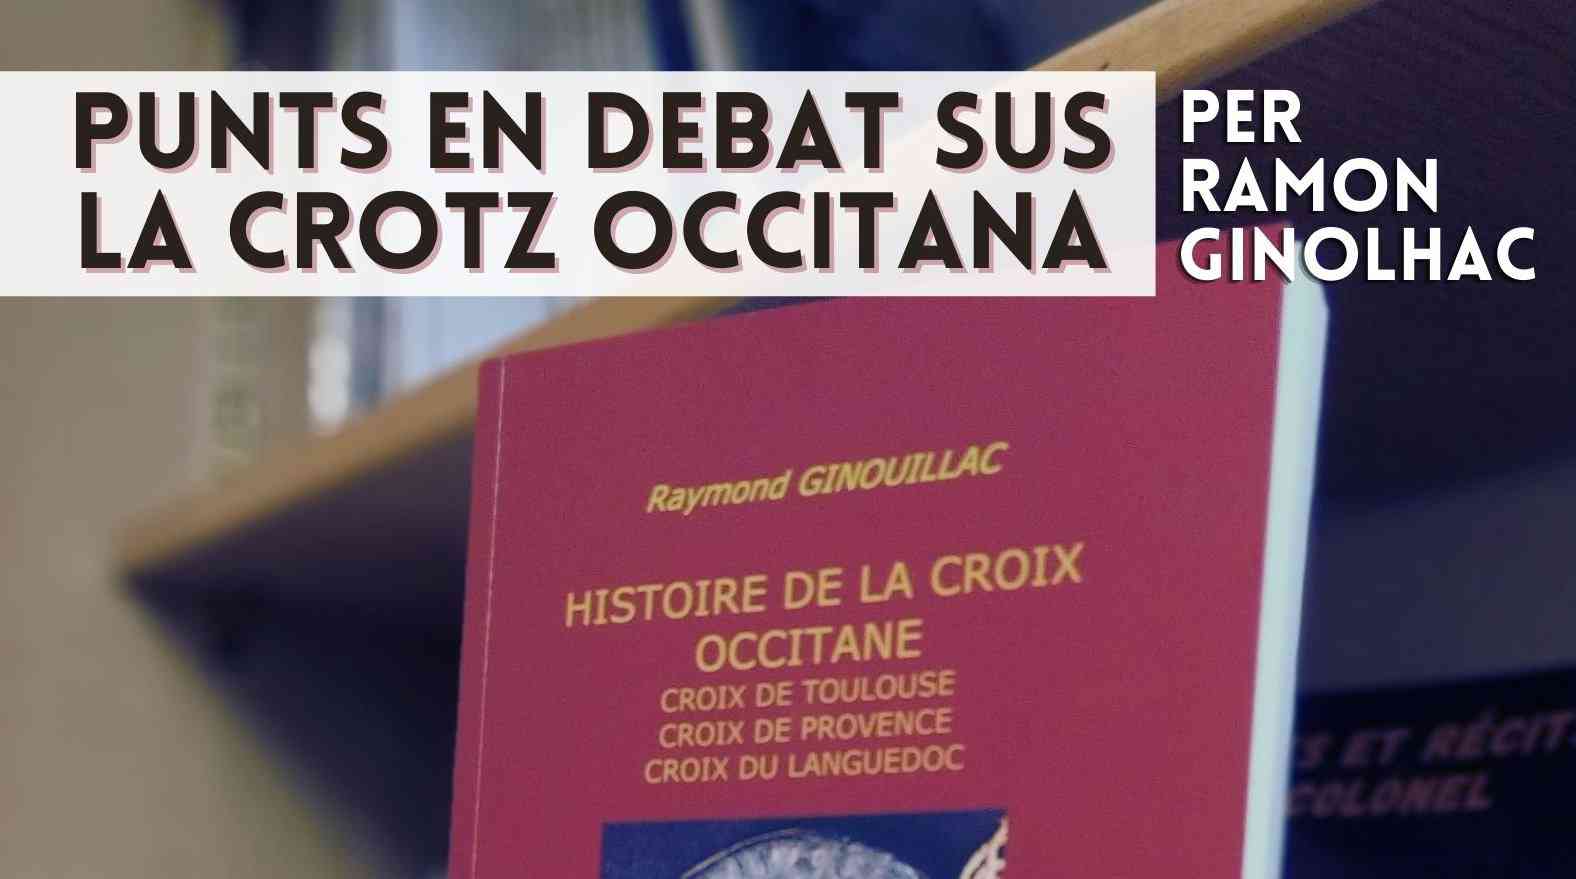 Ginolhac Crotz occitana 2021